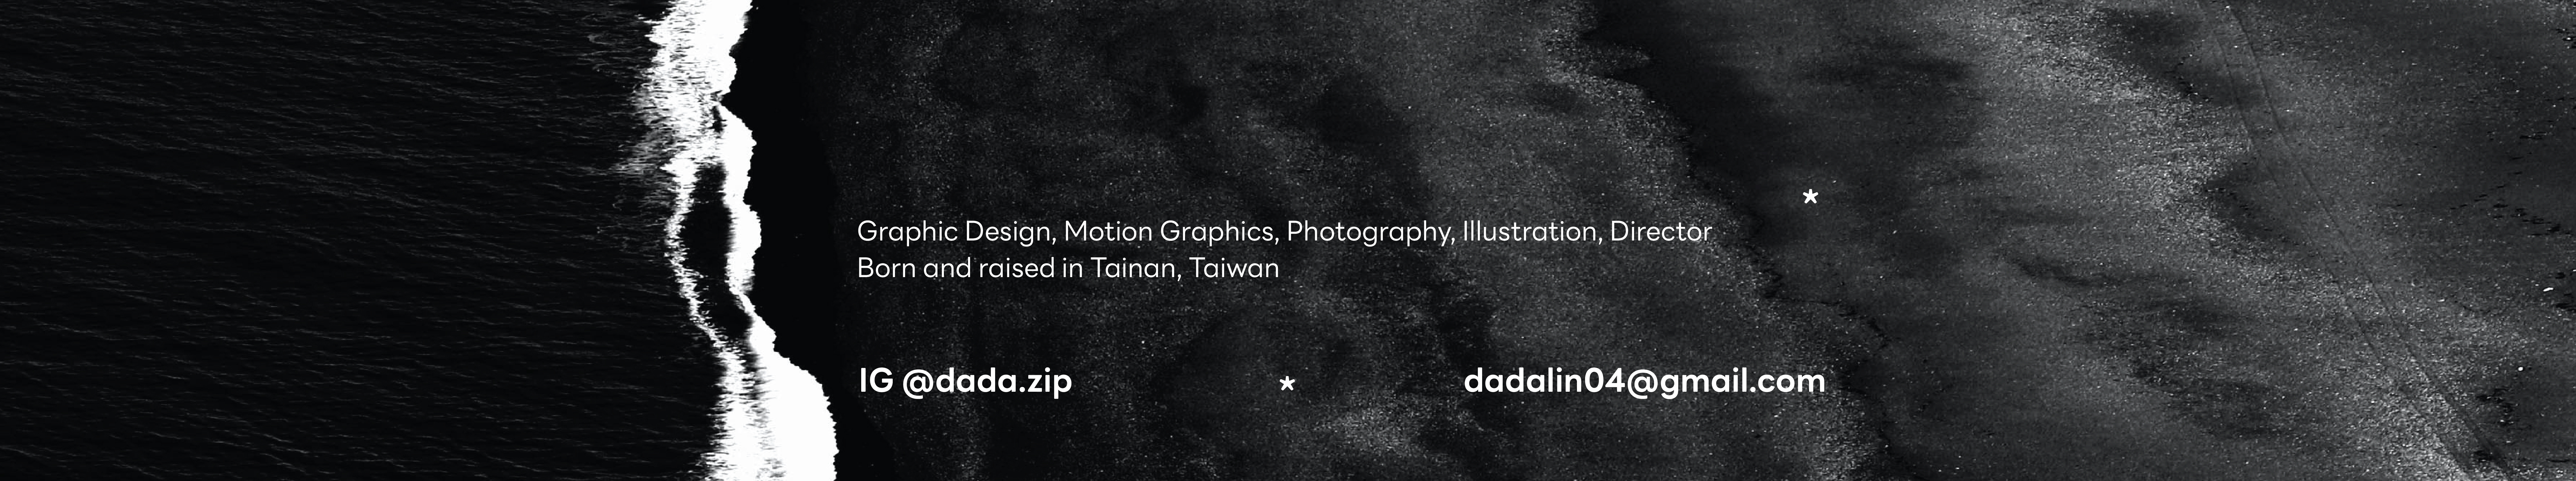 Banner de perfil de Dada Lin